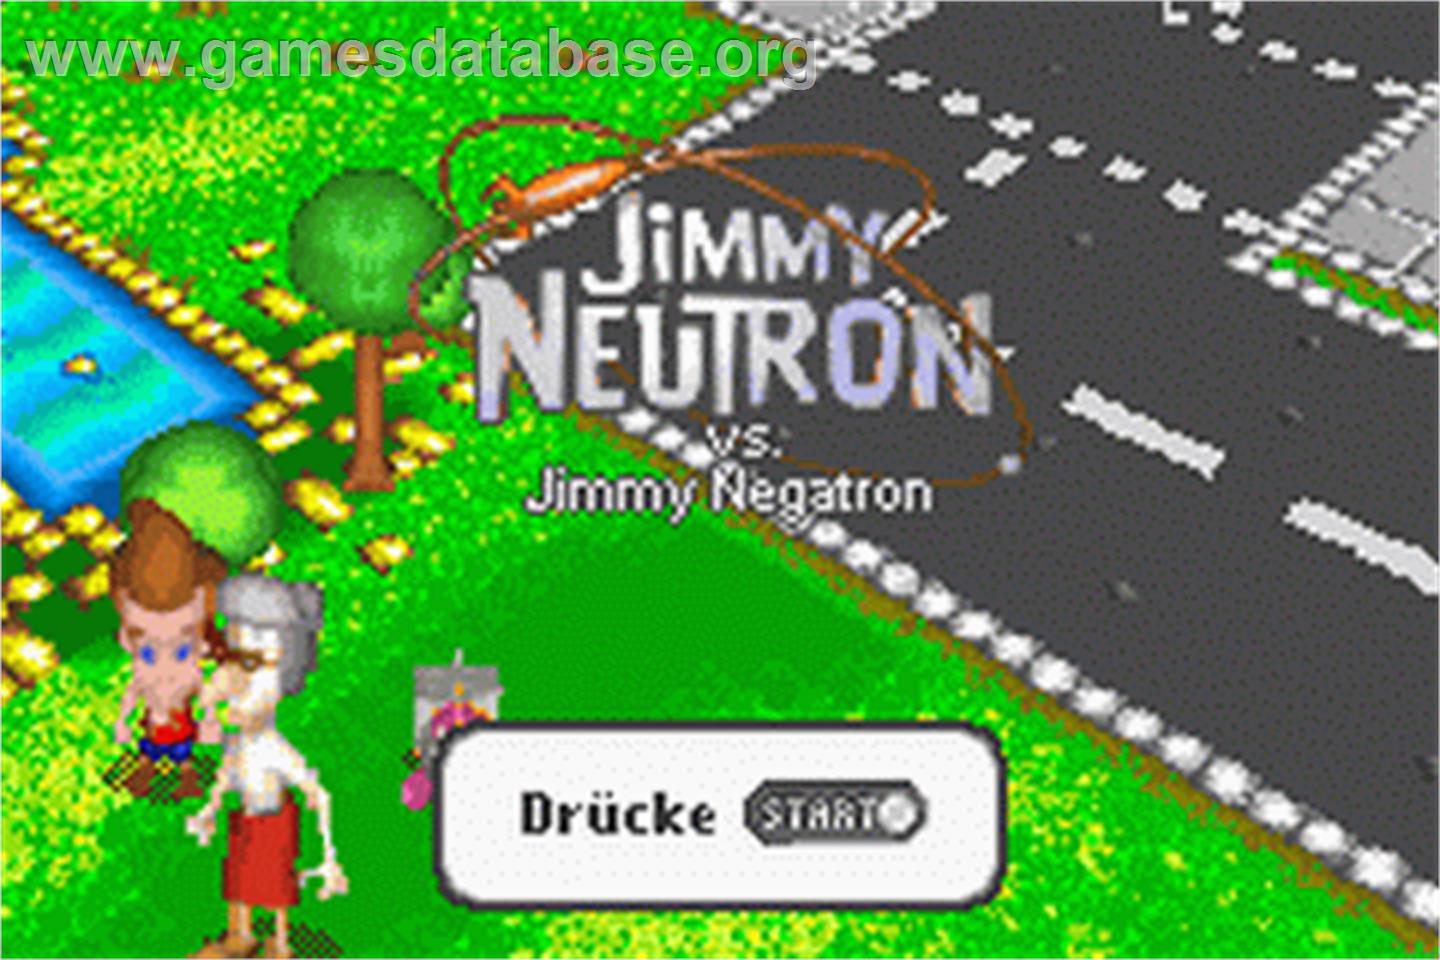 Adventures of Jimmy Neutron: Boy Genius - Jimmy Neutron Vs. Jimmy Negatron - Nintendo Game Boy Advance - Artwork - Title Screen